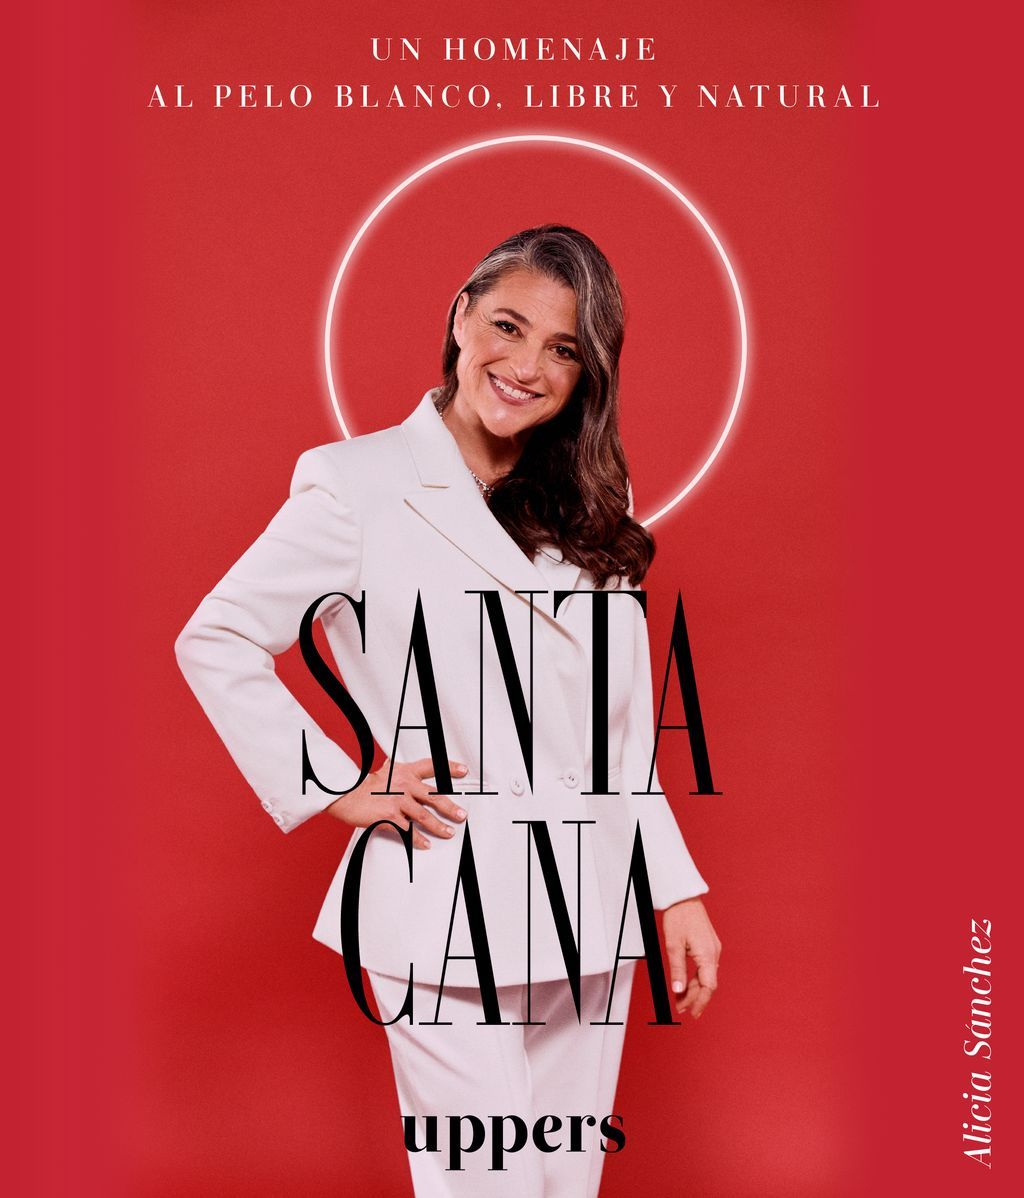 Santa_Cana_Alicia_Sanchez_Rojo